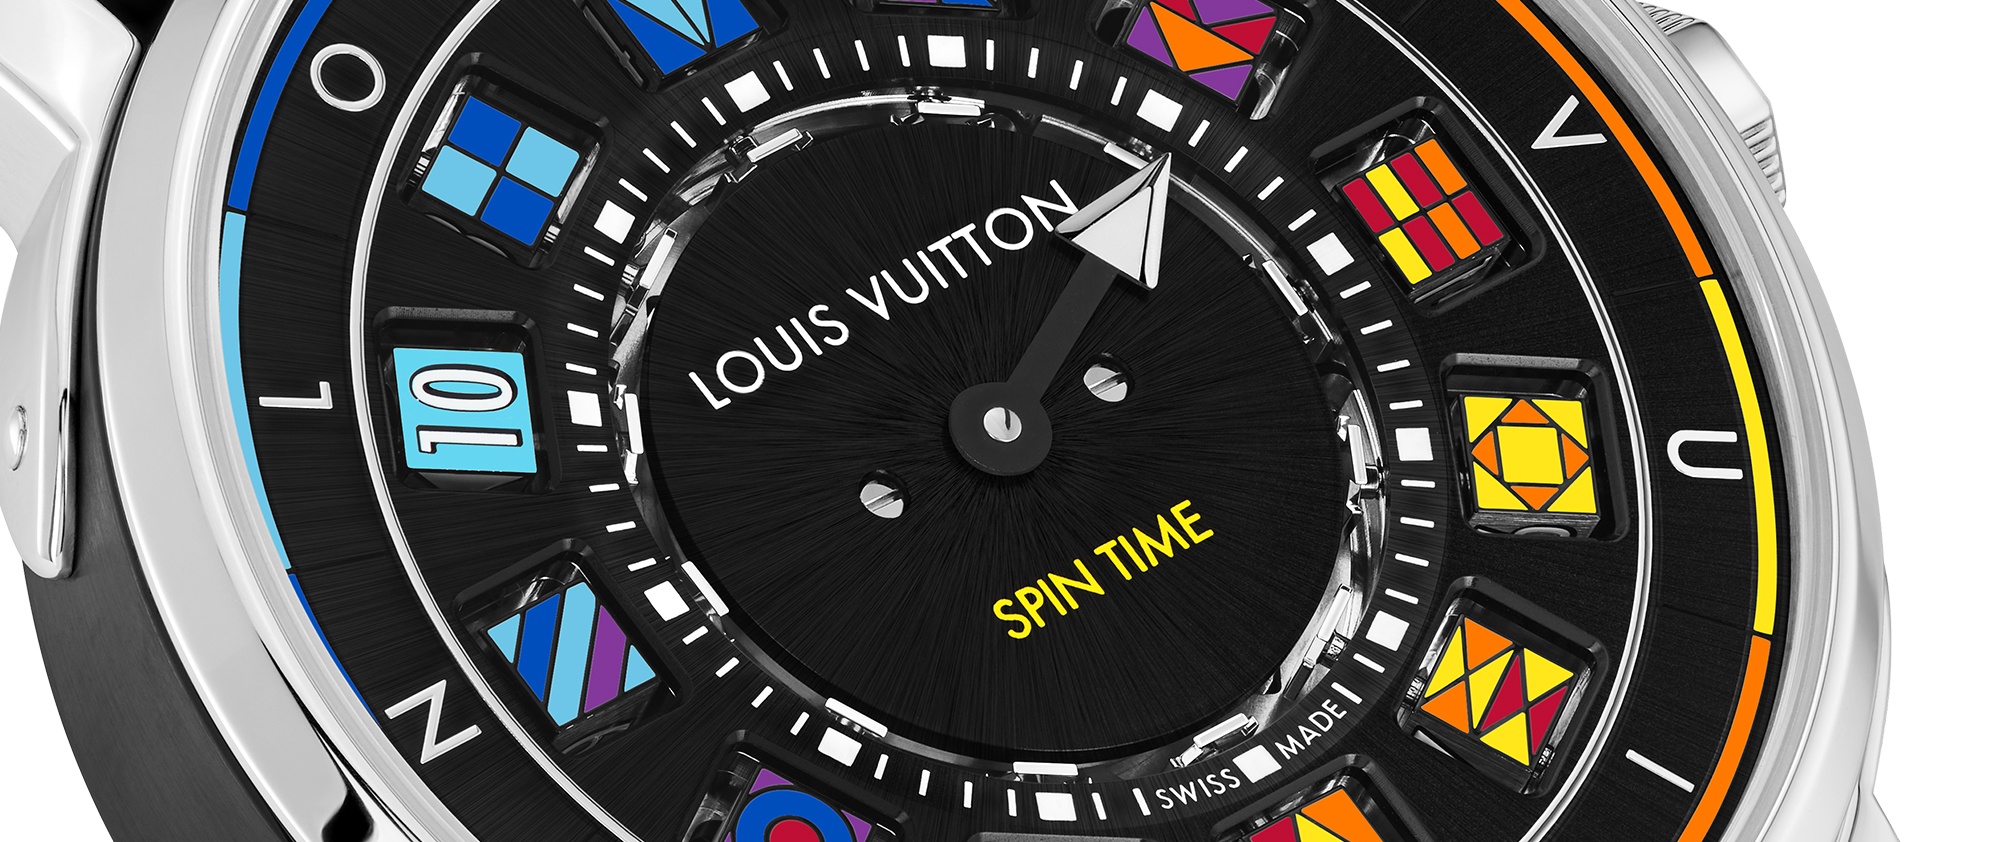 VIDEO: The Louis Vuitton Tambour Outdoor Chronograph